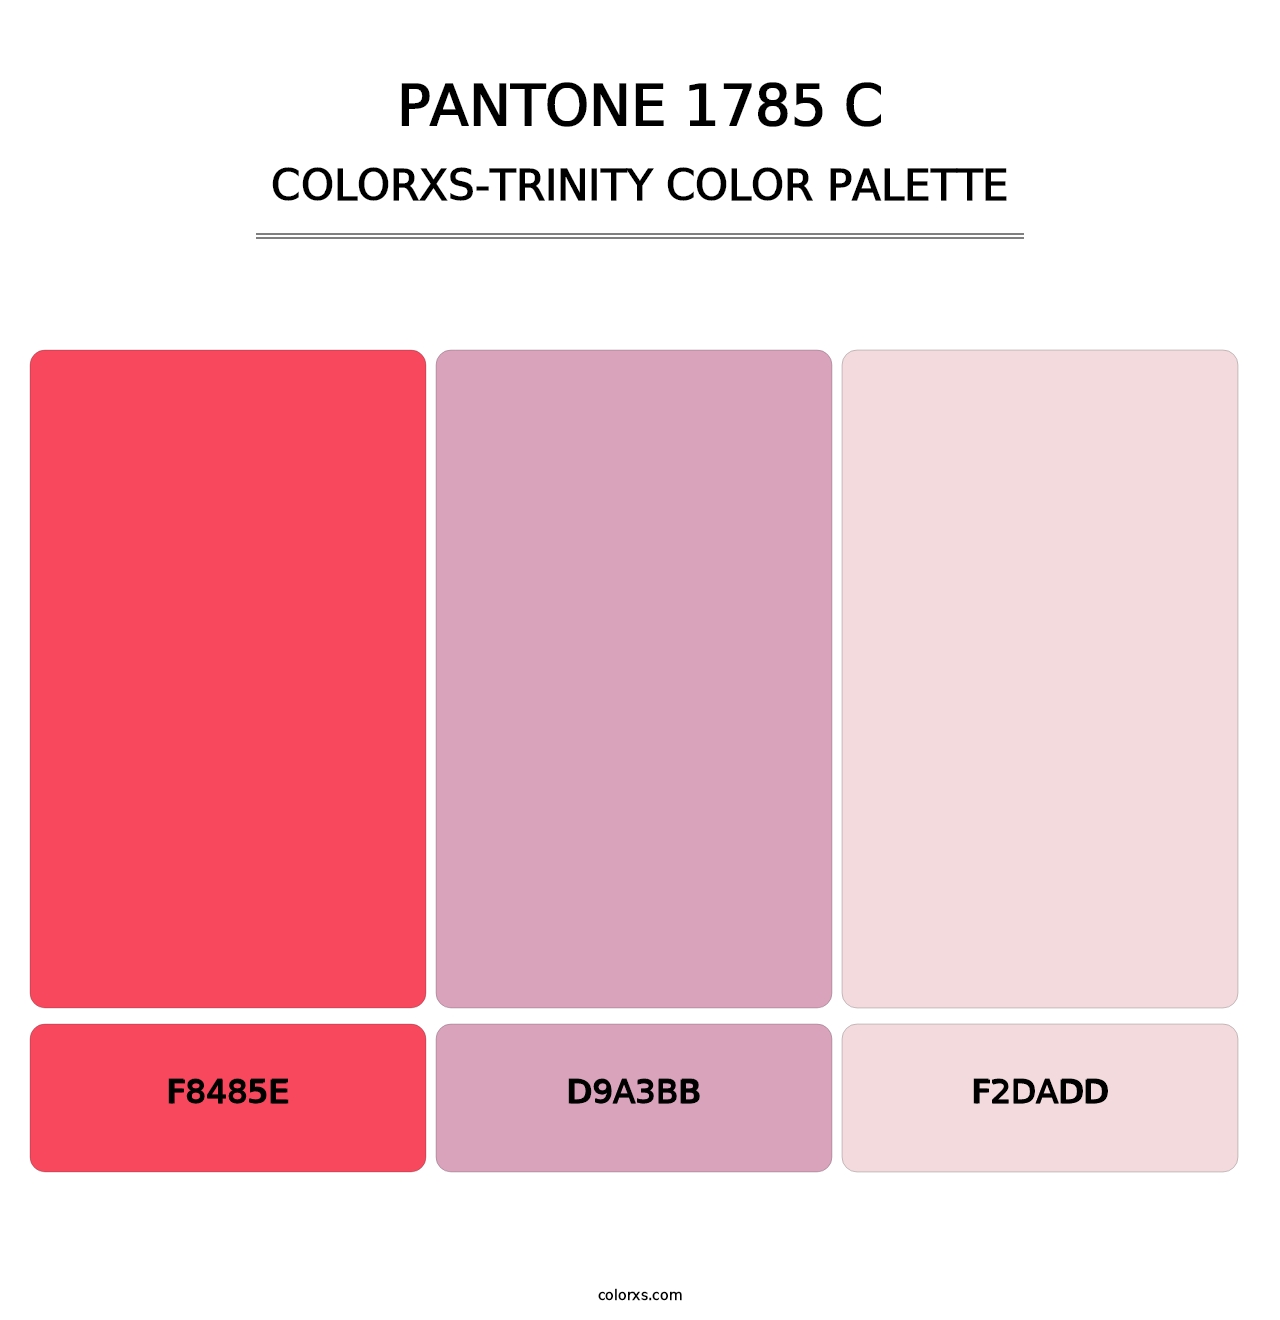 PANTONE 1785 C - Colorxs Trinity Palette